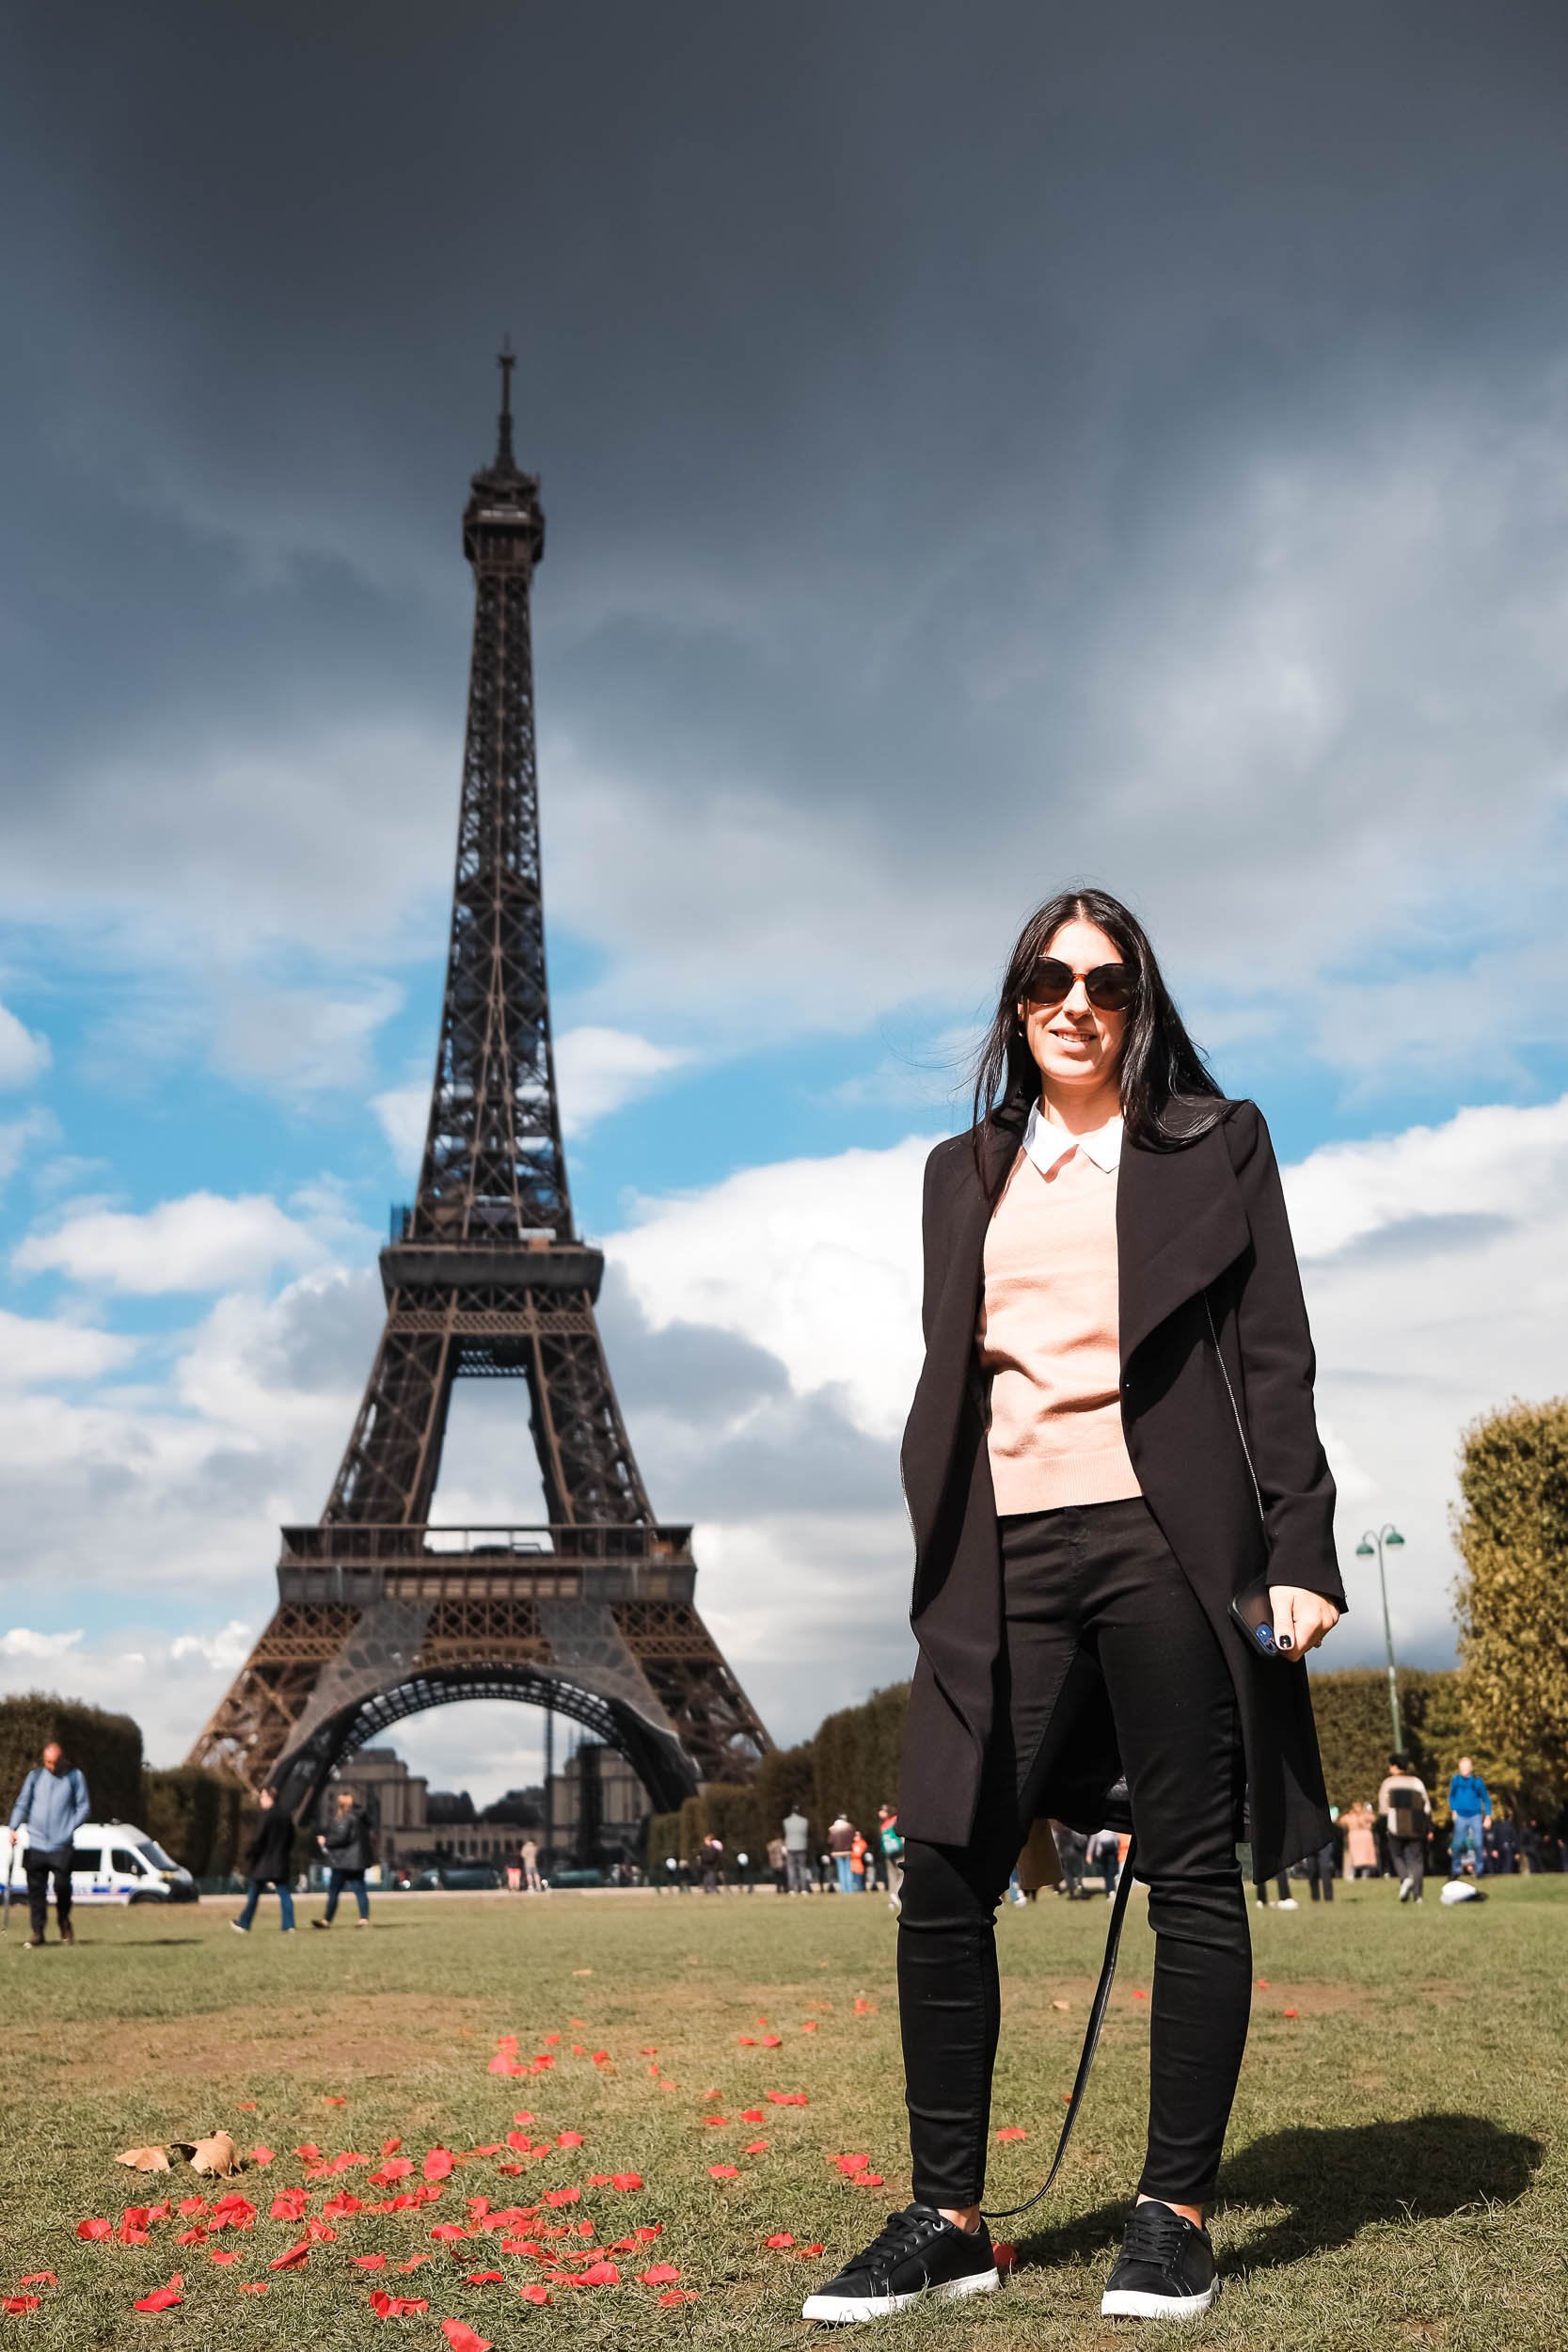 Anya next to Eiffel Tower, Paris - Taken with Fujifilm X100V by Rob Swan